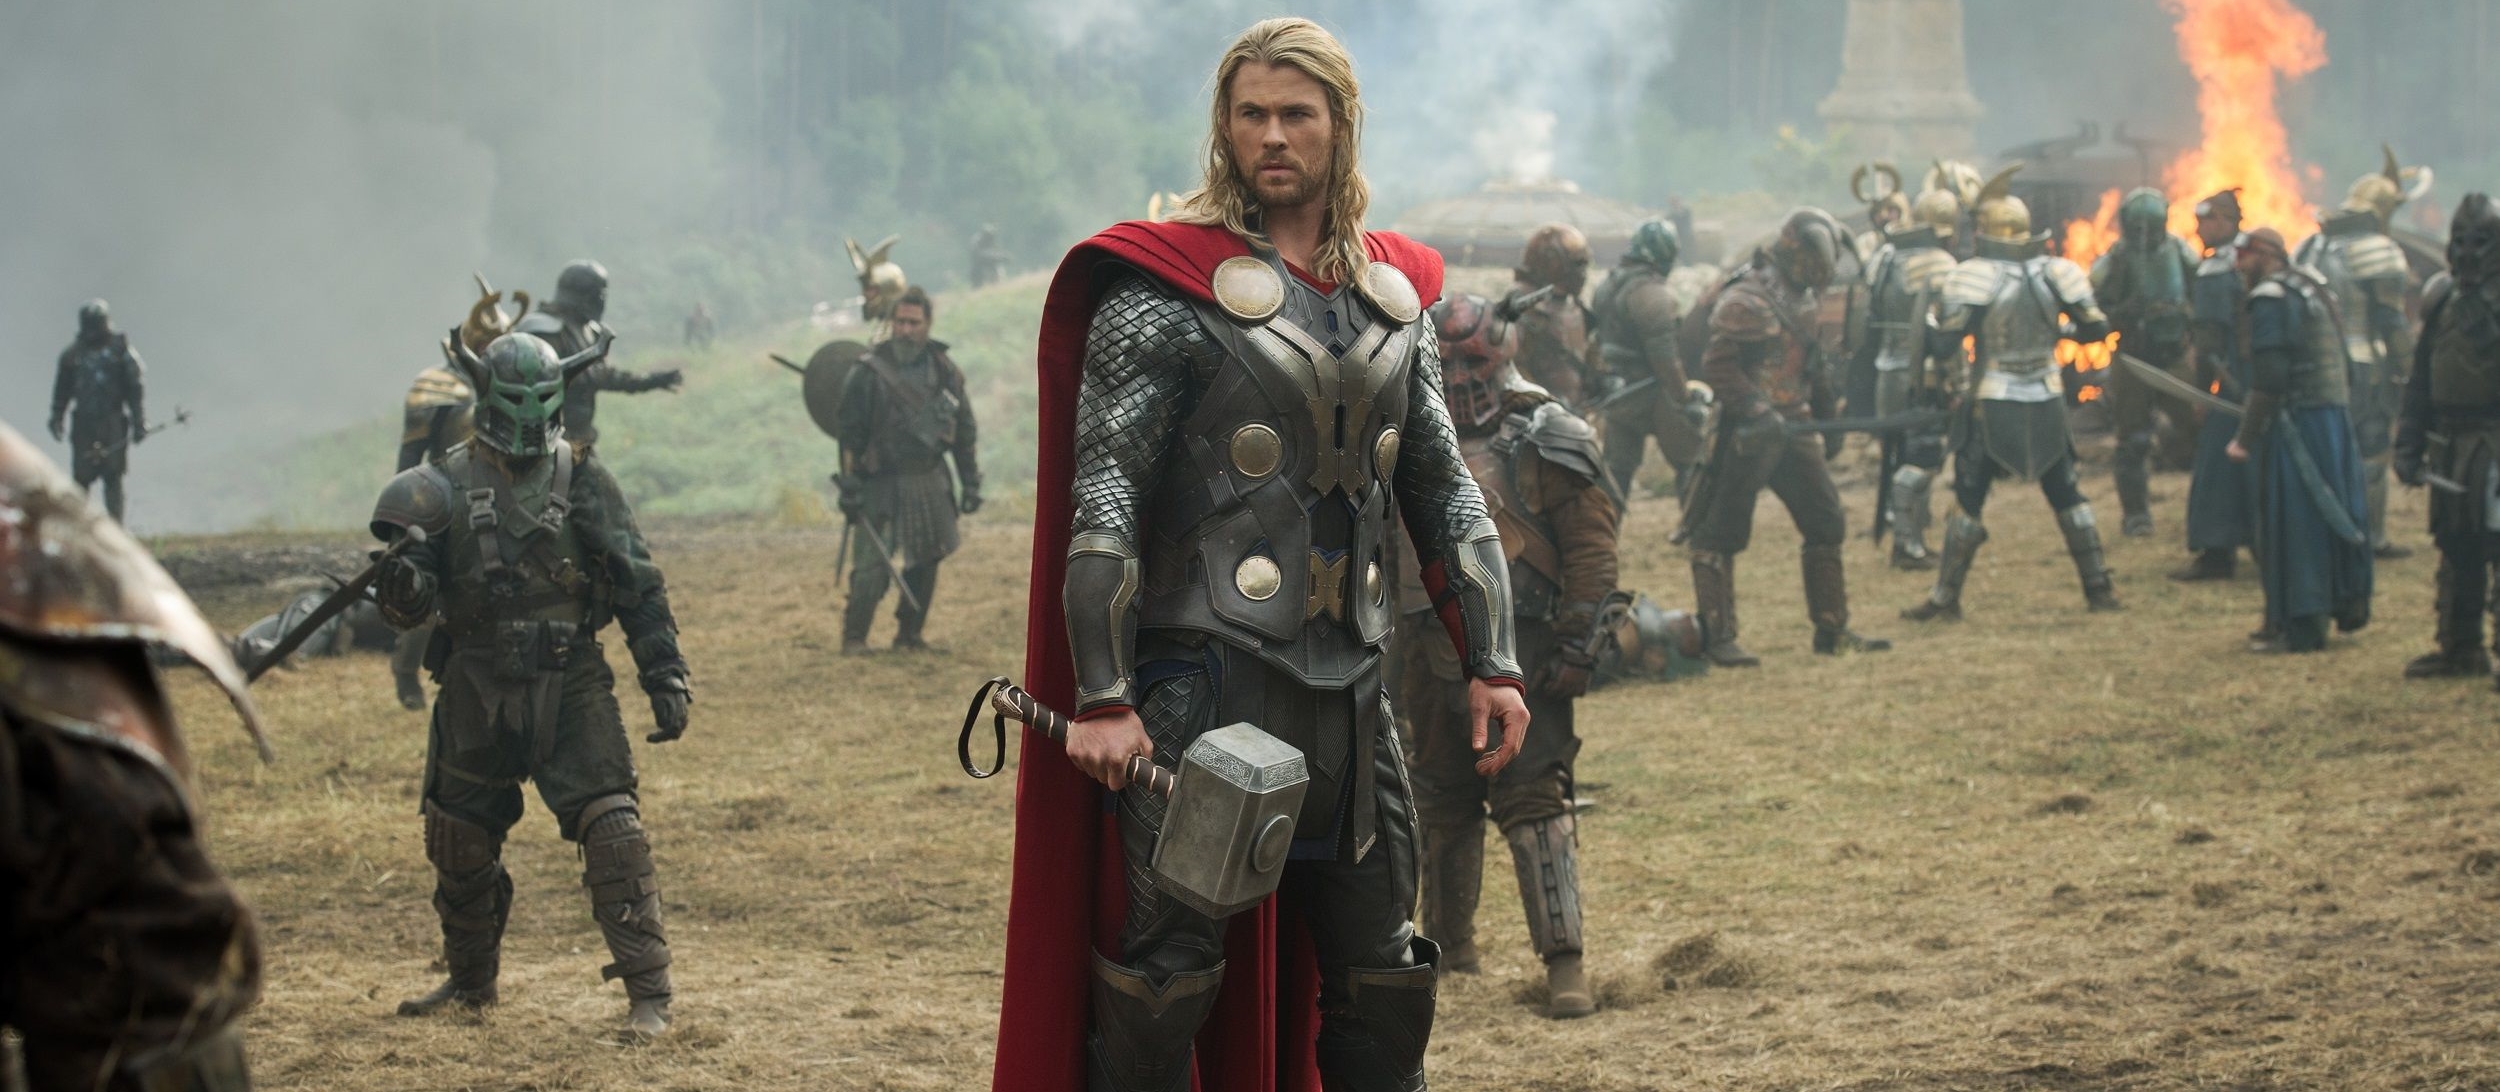 Thor-2-The-Dark-World-Official-Photo-fighting-Marauders.jpg